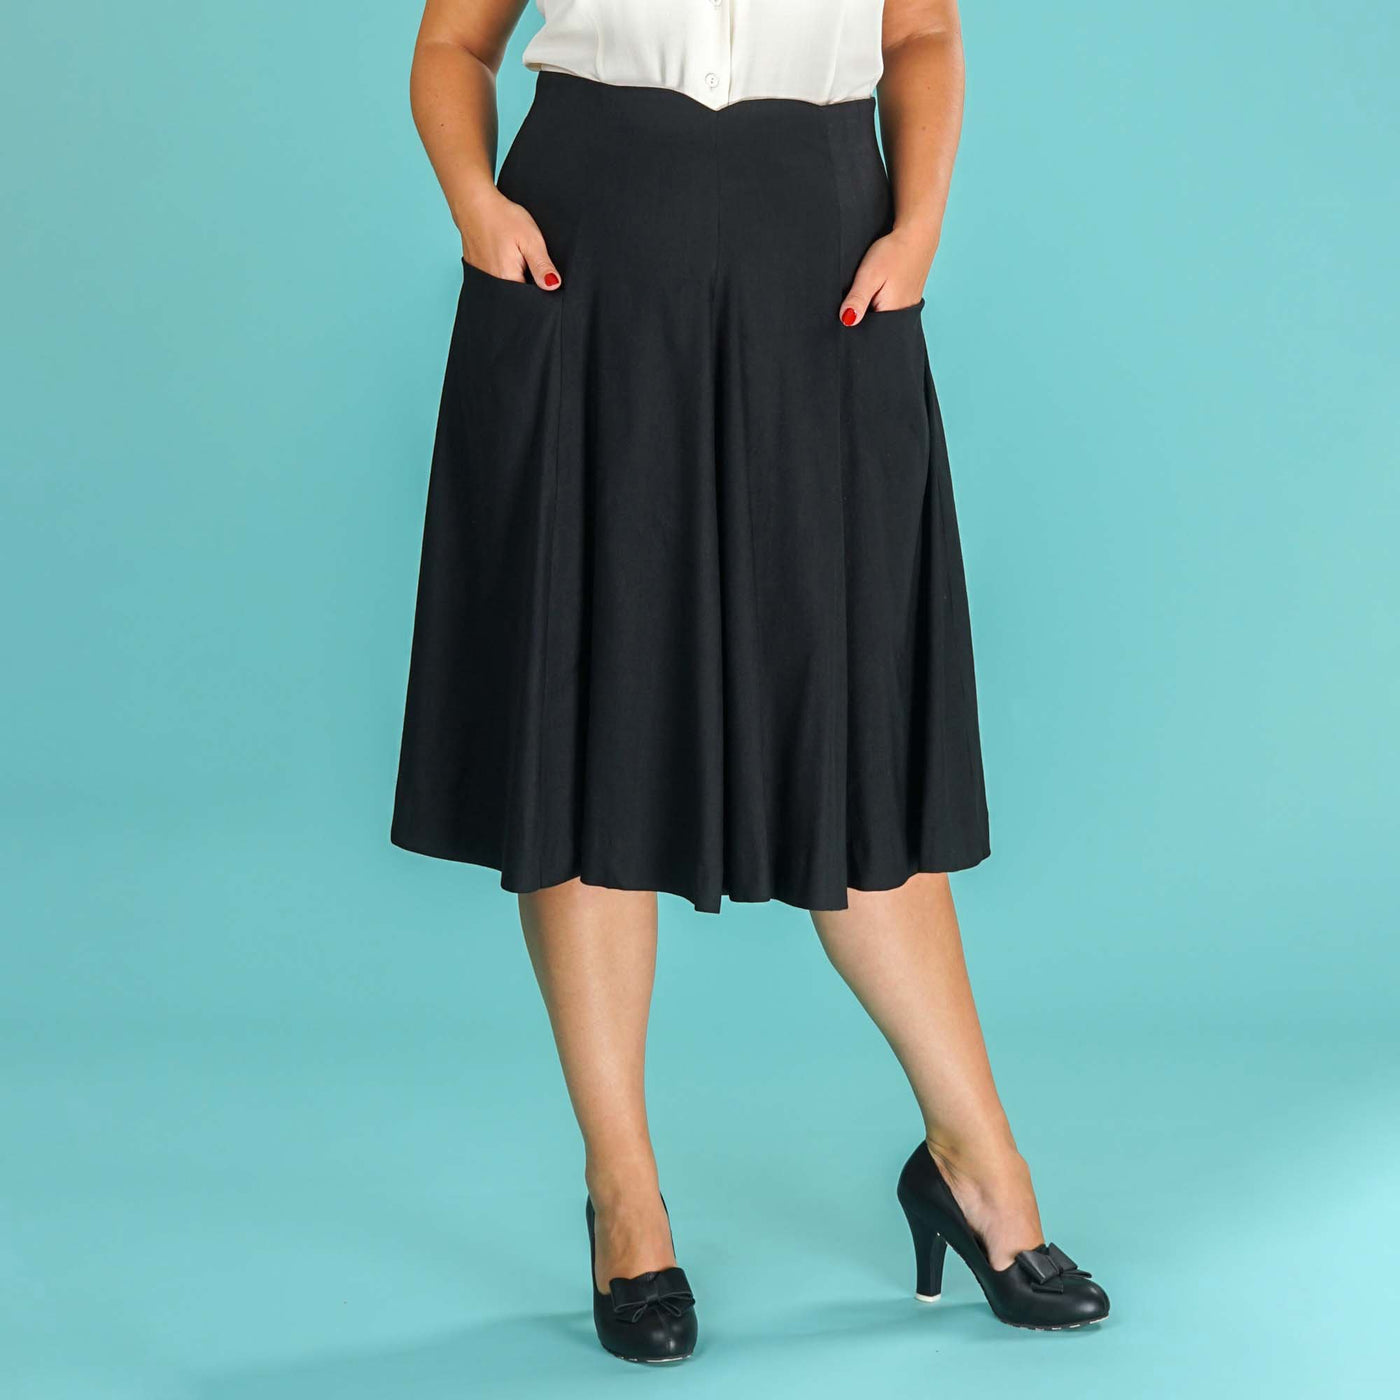 Black Swing Skirt Swirly Sweetheart Emmy Design